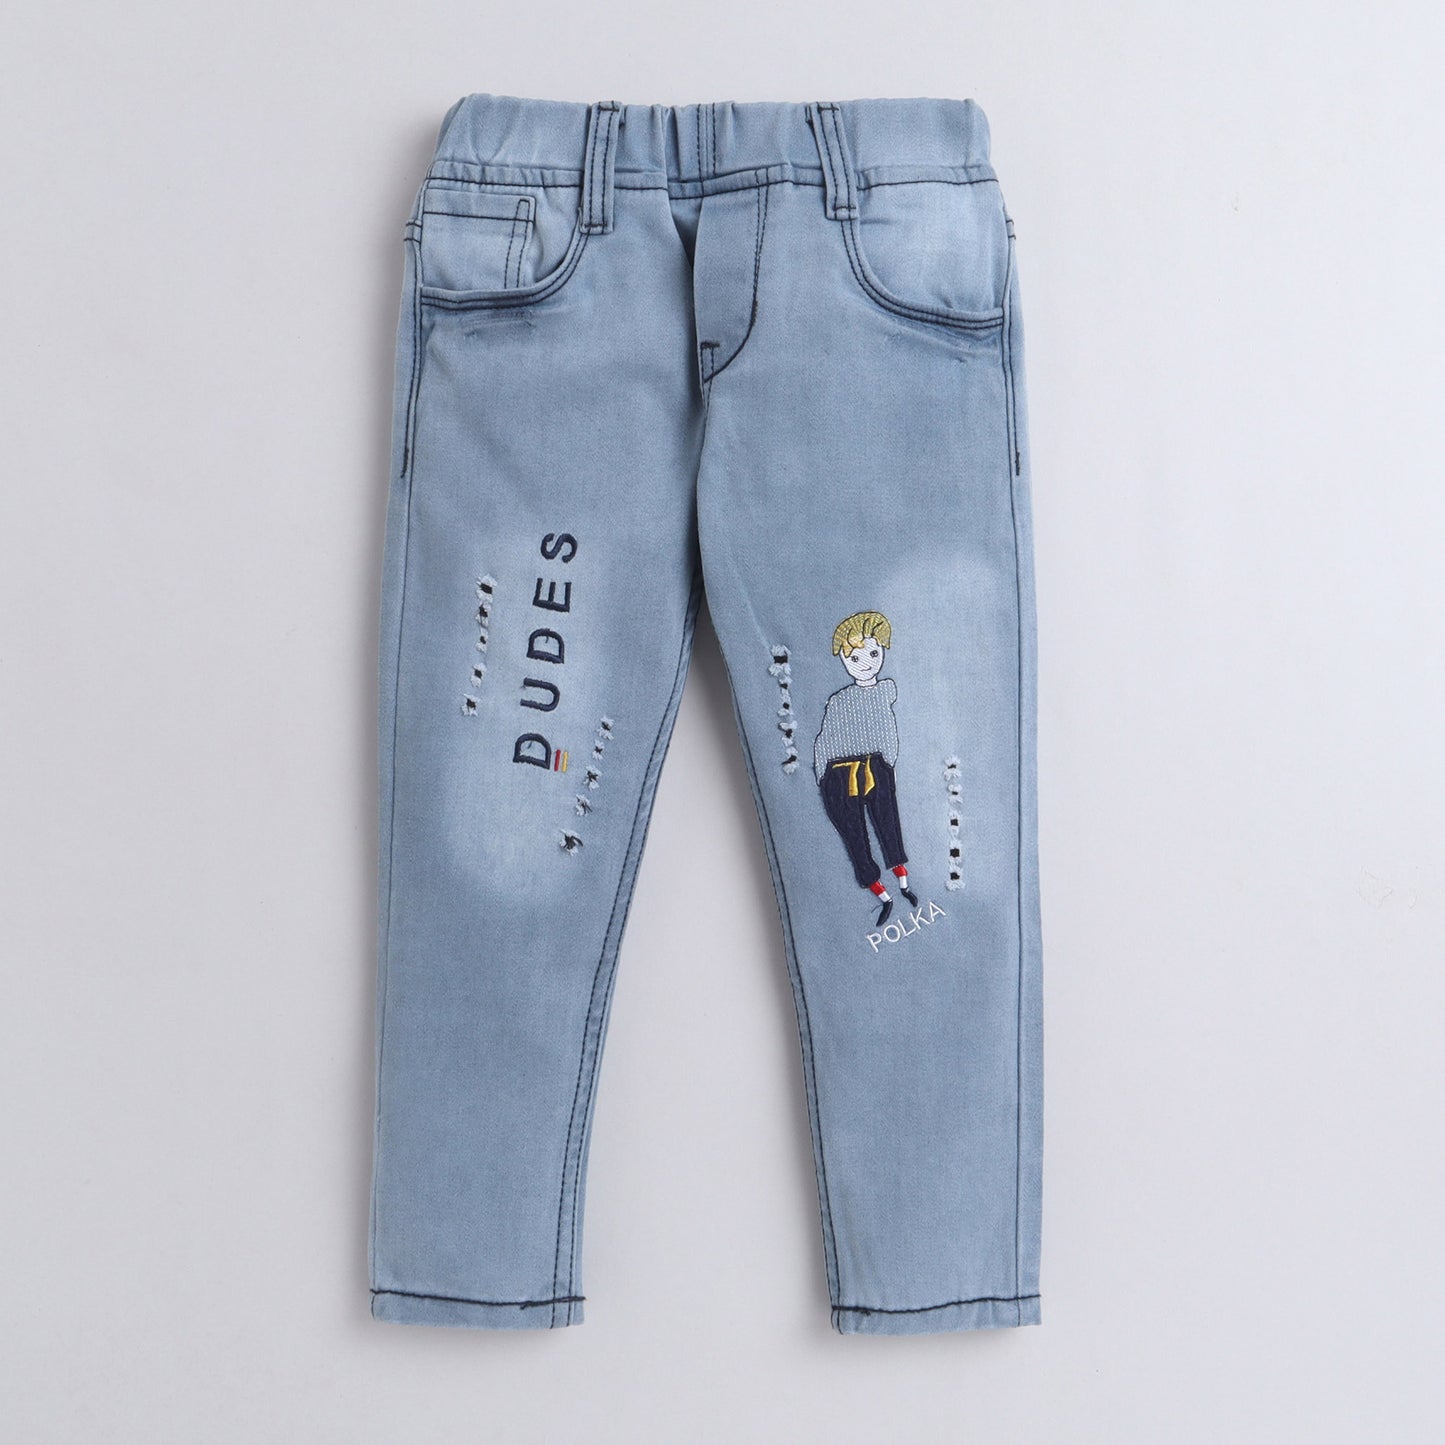 Polka Tots Denim Jeans With Dudes Boy Embroidery Boy Blue